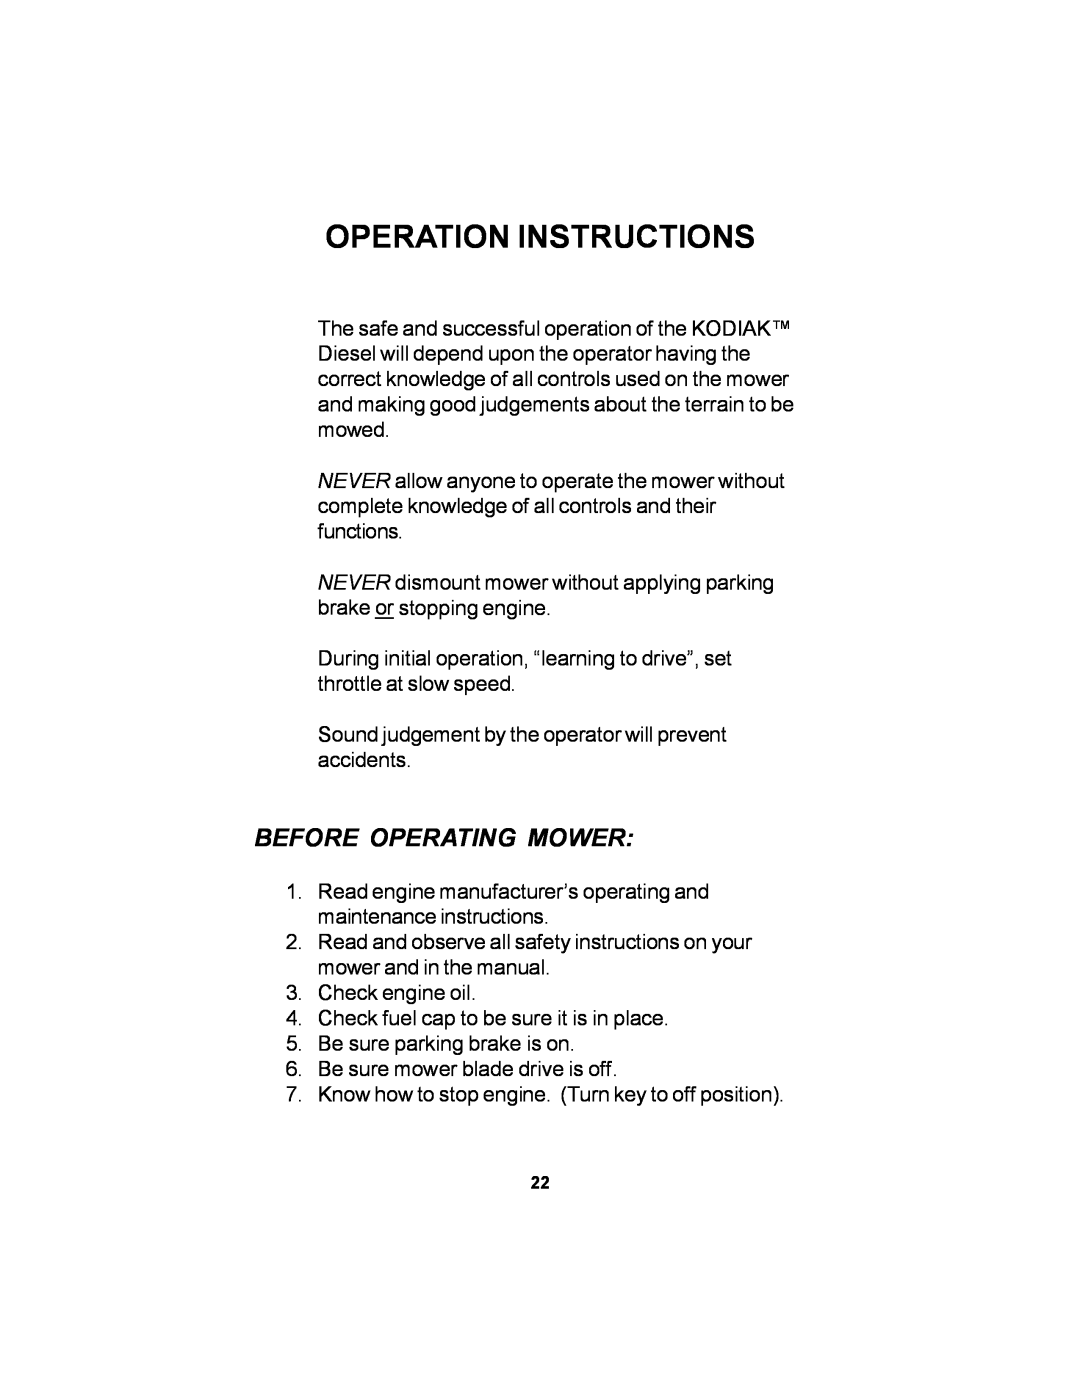 Dixon 18626-106 manual Operation Instructions, Before Operating Mower 